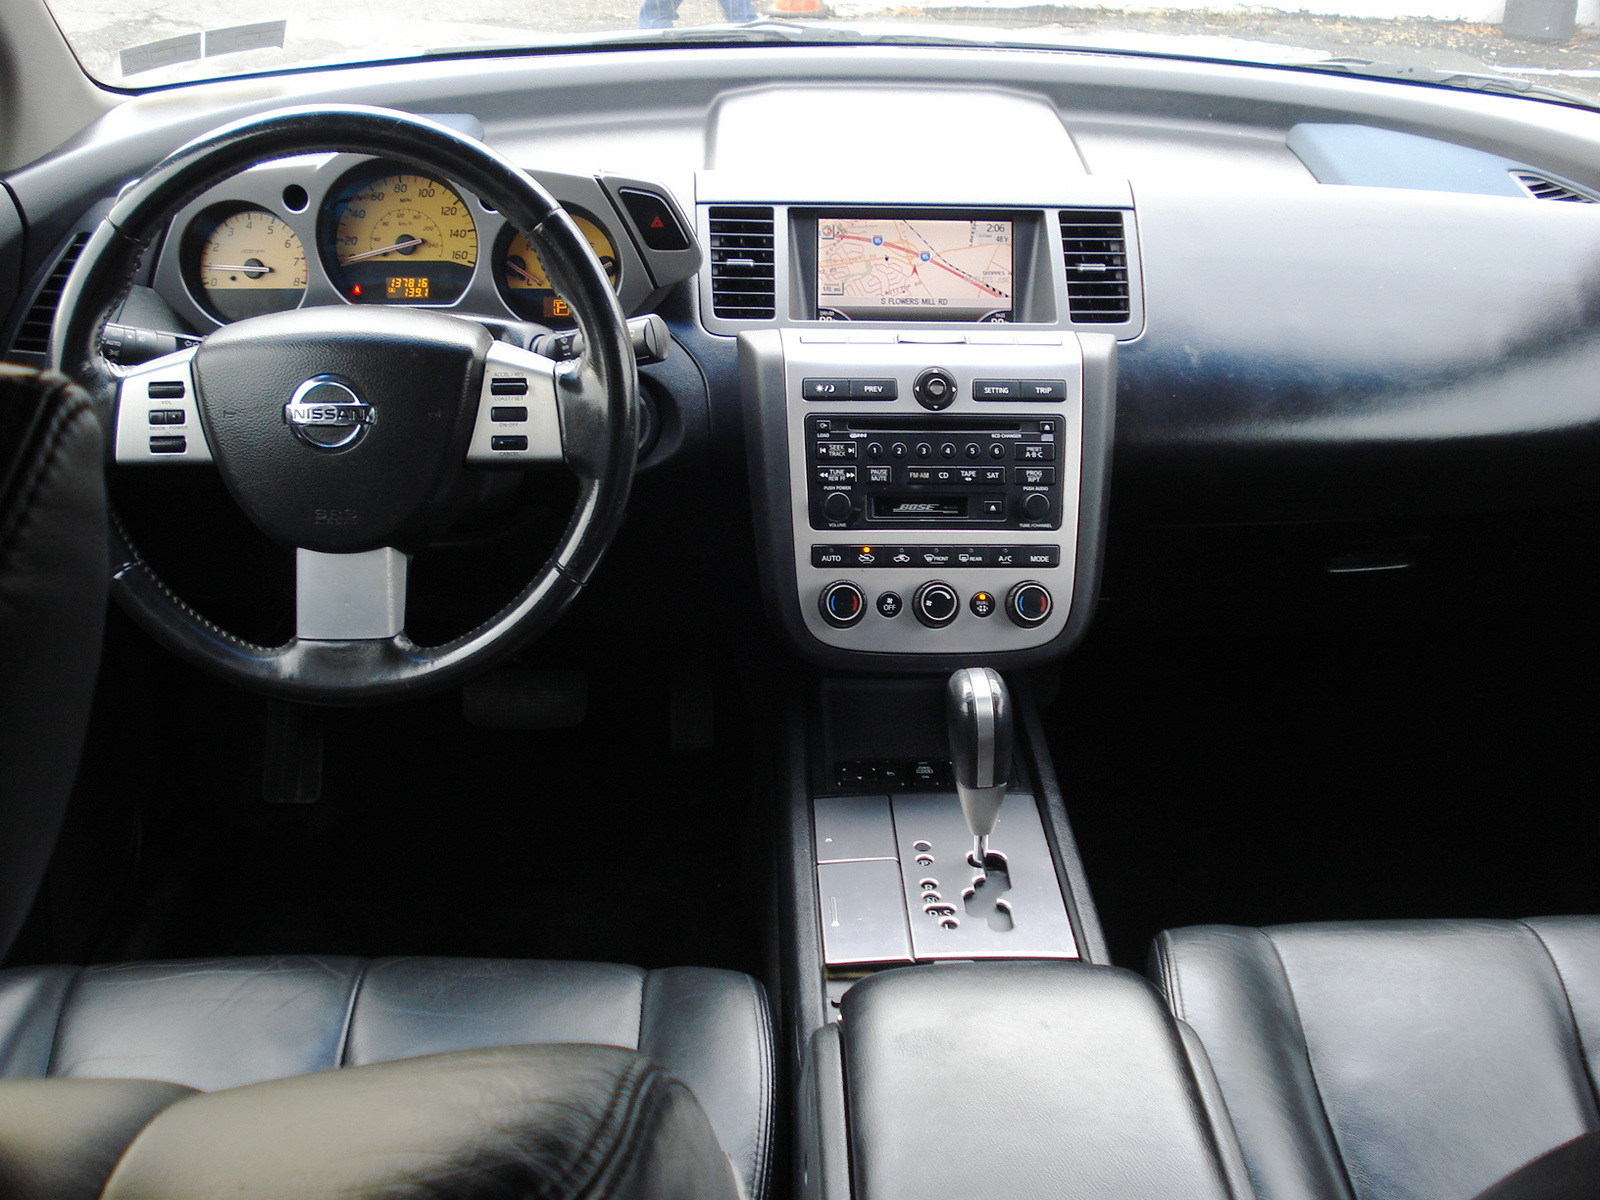 2004 Nissan murano interior photos